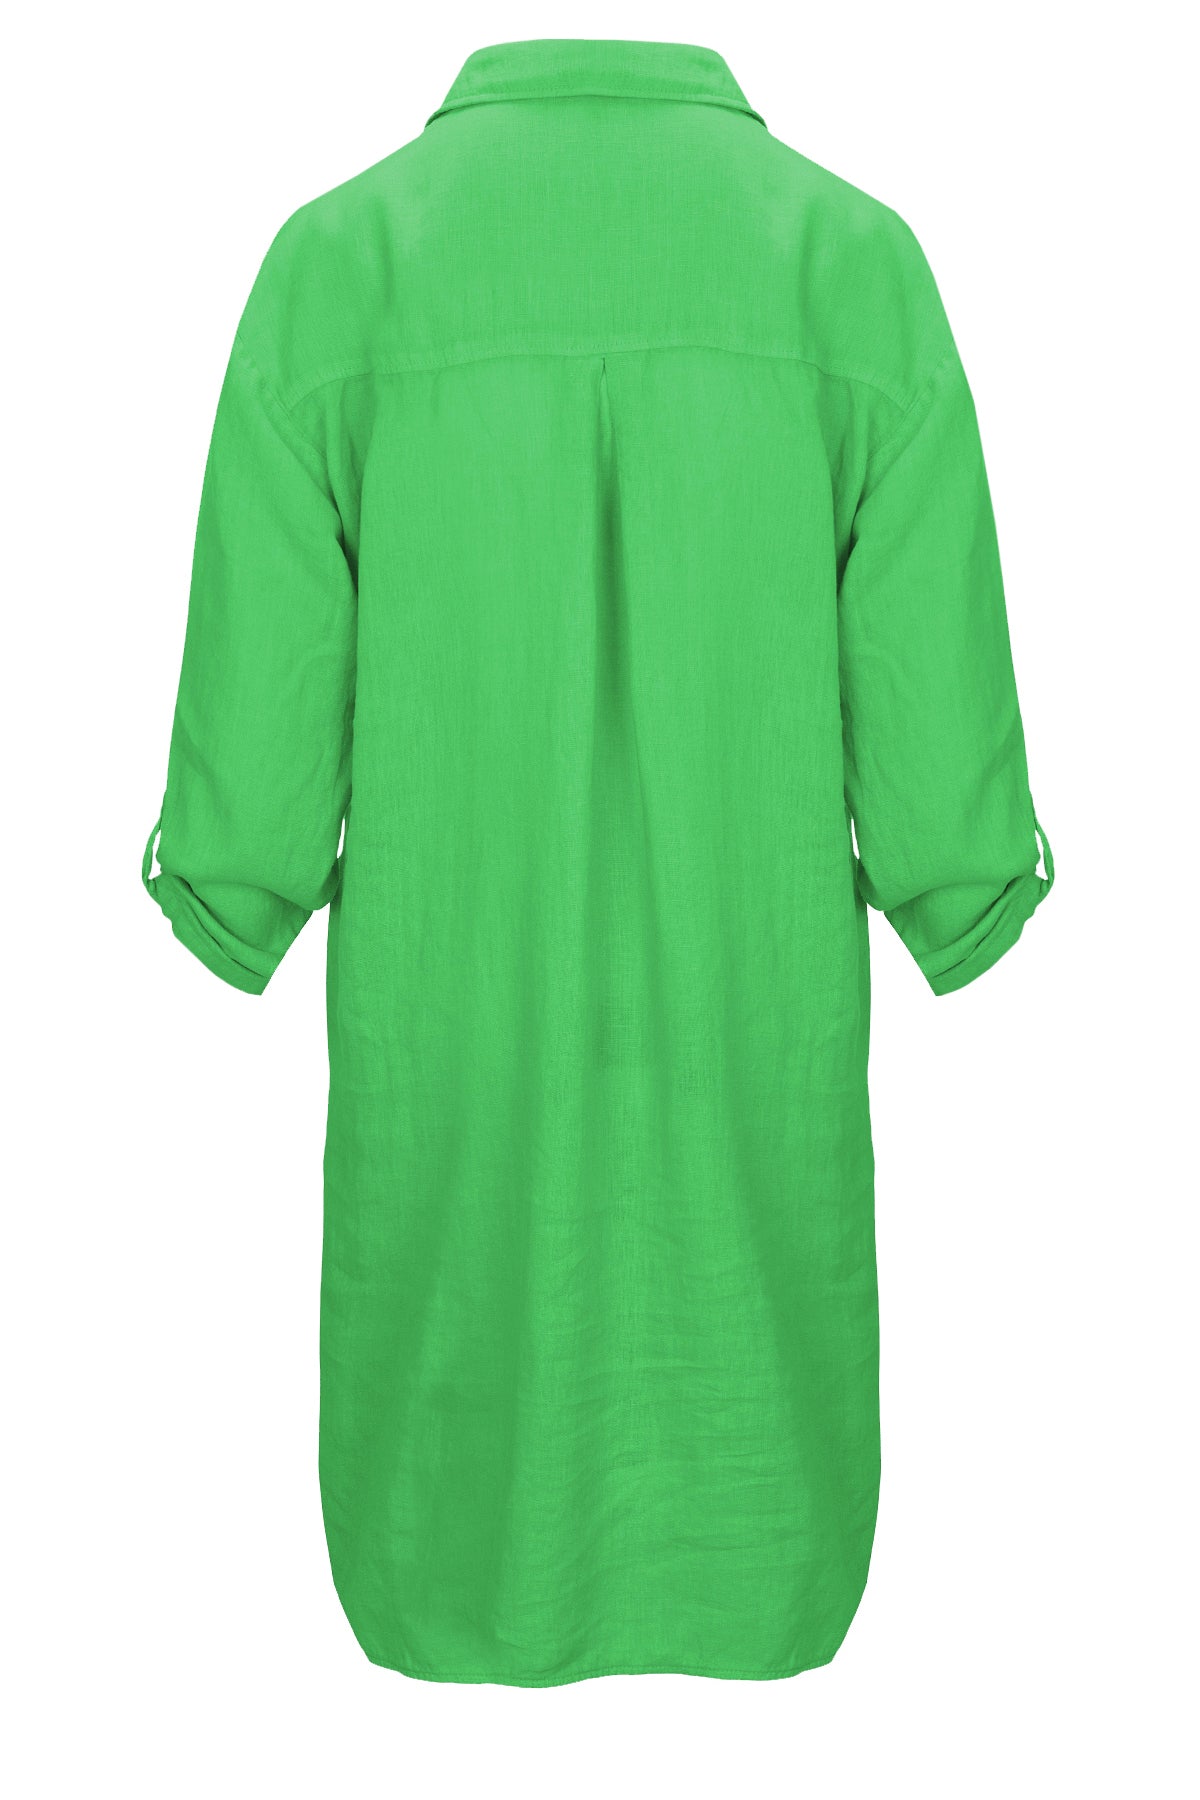 LUXZUZ // ONE TWO Osa Long Shirt Dress 623 Kelly Green